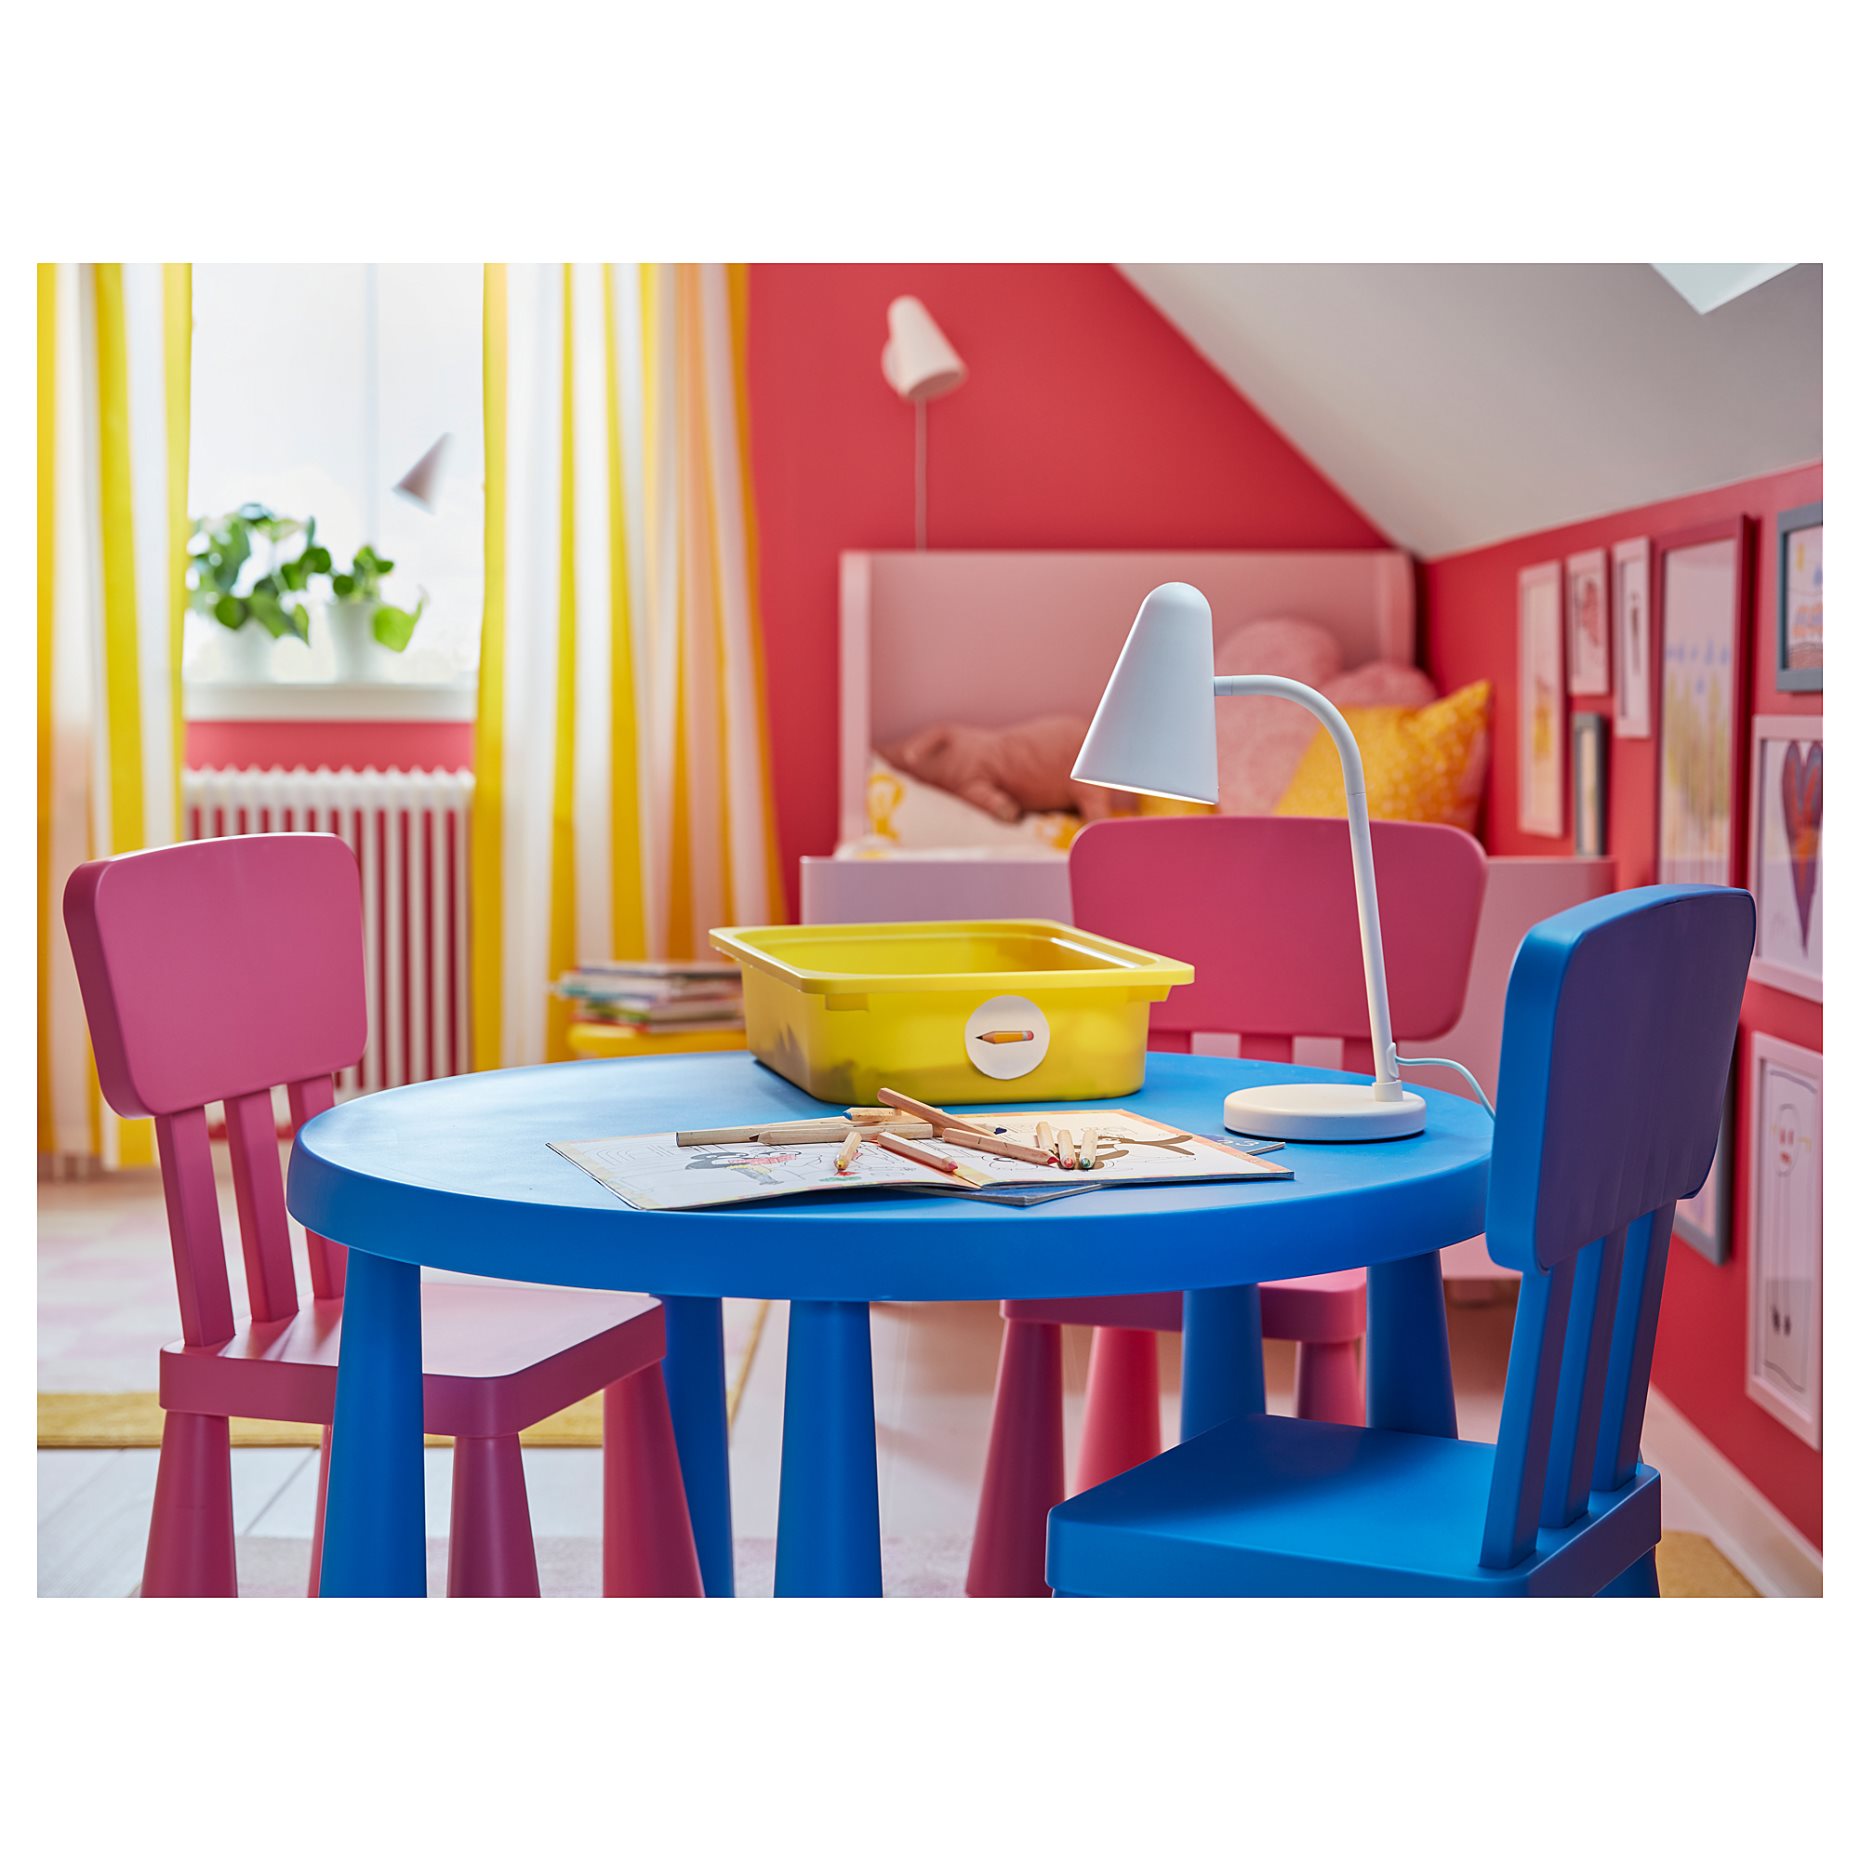 MAMMUT, childrens table, indoor/outdoor, 903.651.80